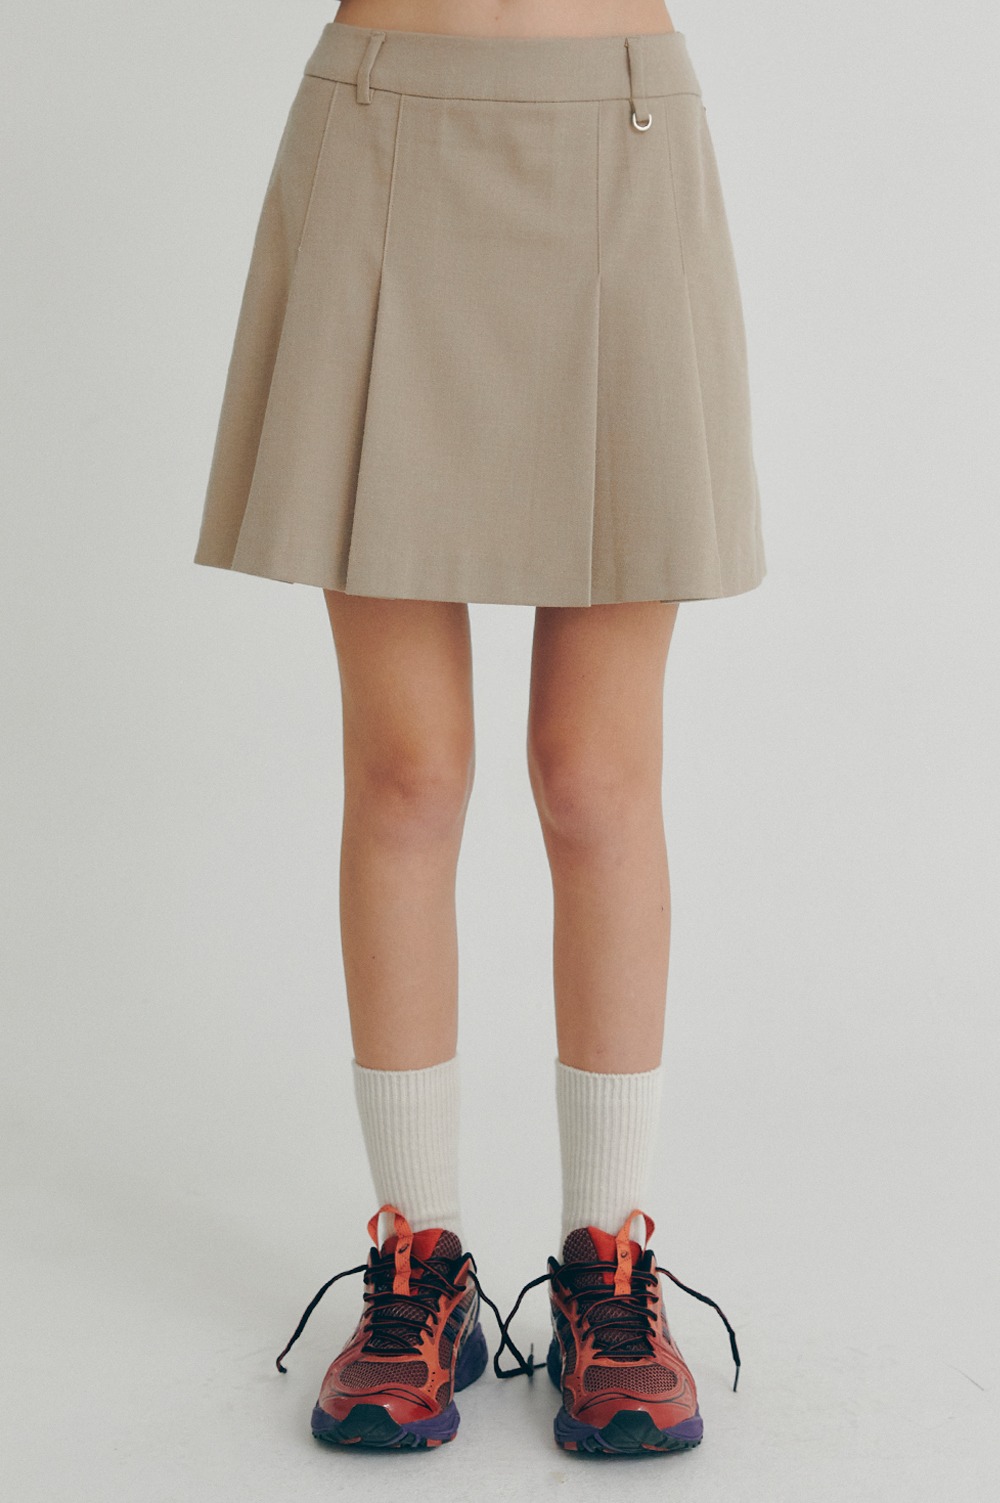 clove - [22FW clove] Wool Pleated Skirt (Beige)